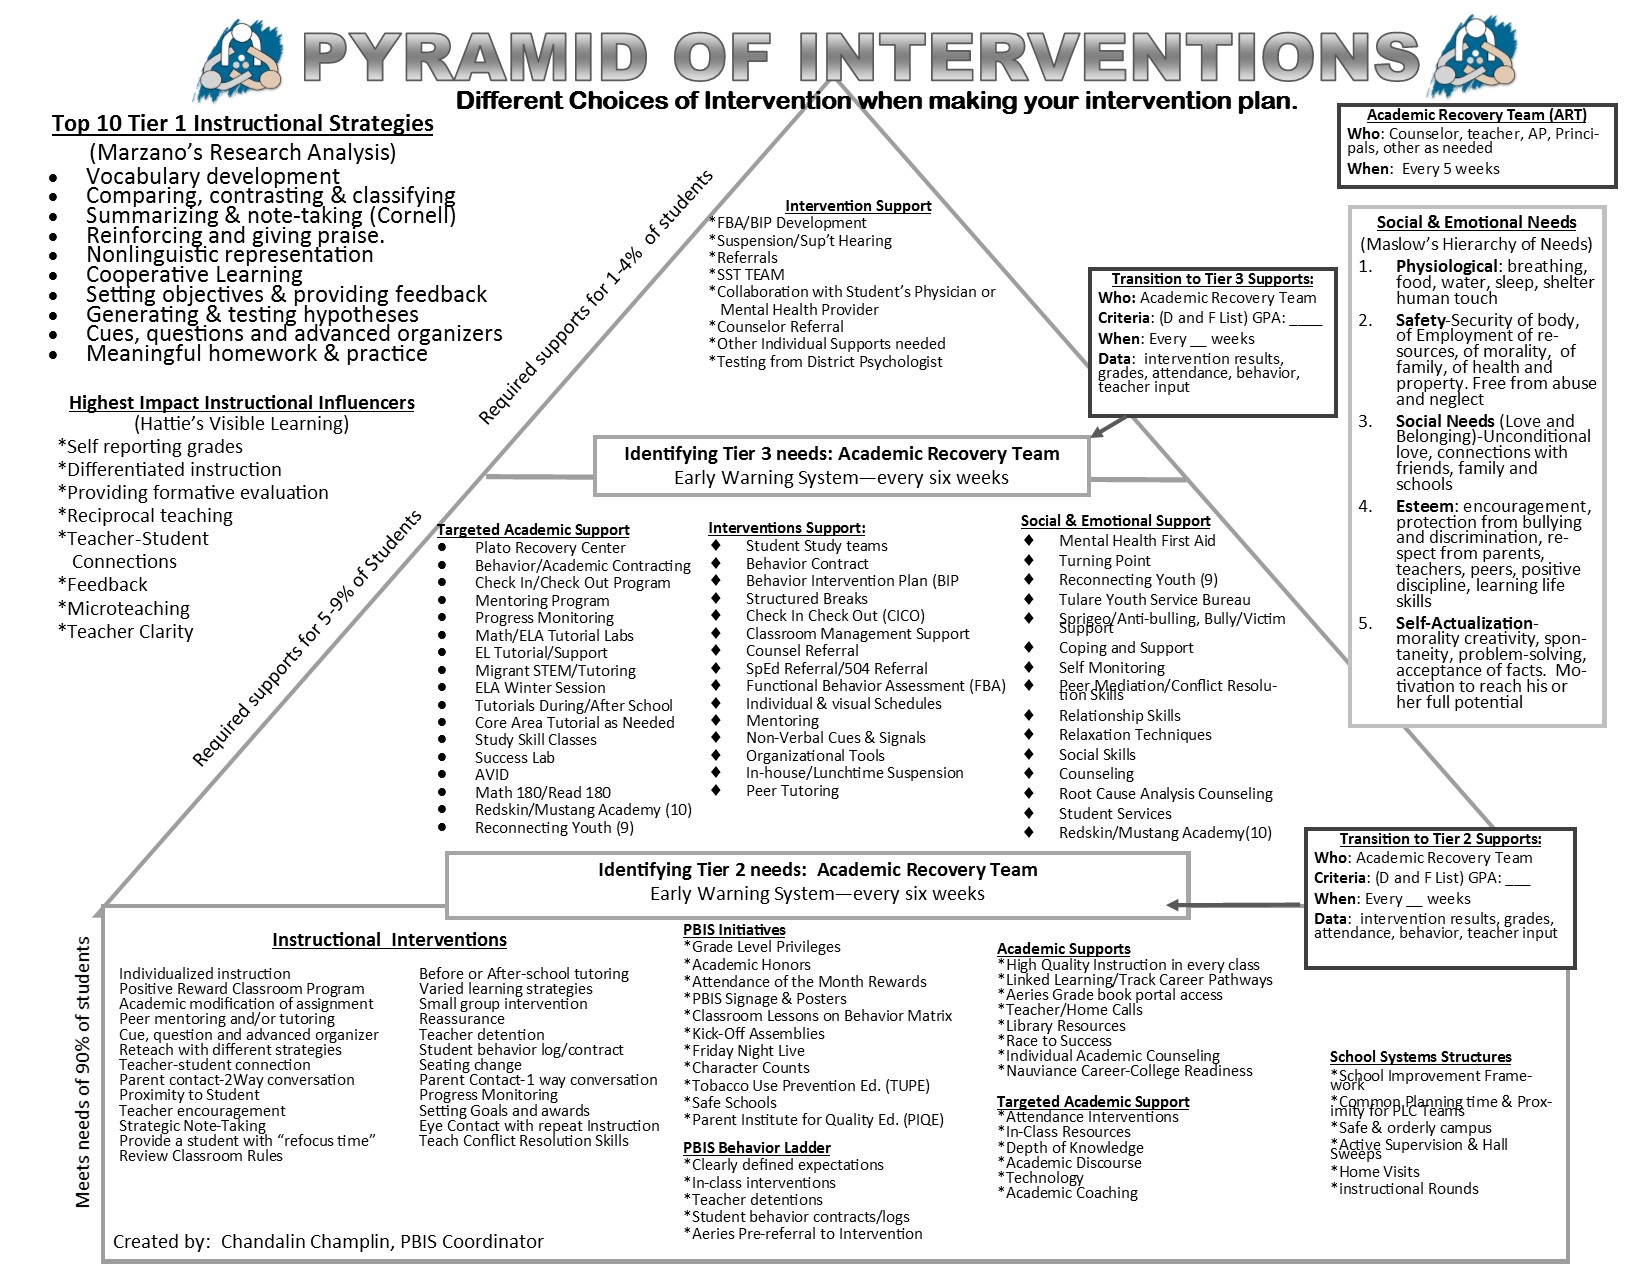 Pyramid of Interventions information